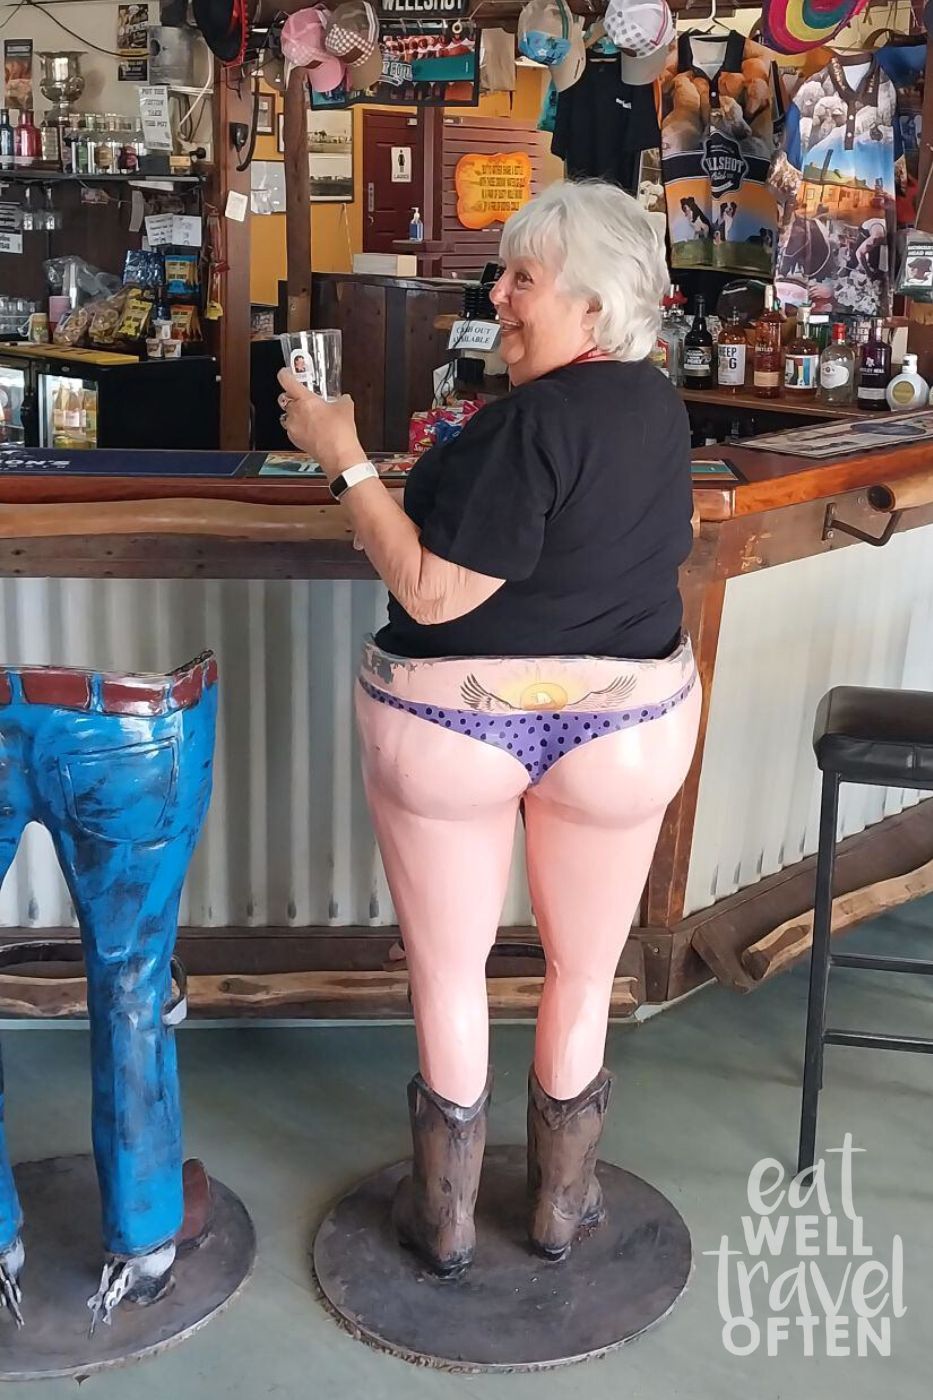 Karen in a humorous bar stool so it looks like she is wearing polka dot bikini bottoms